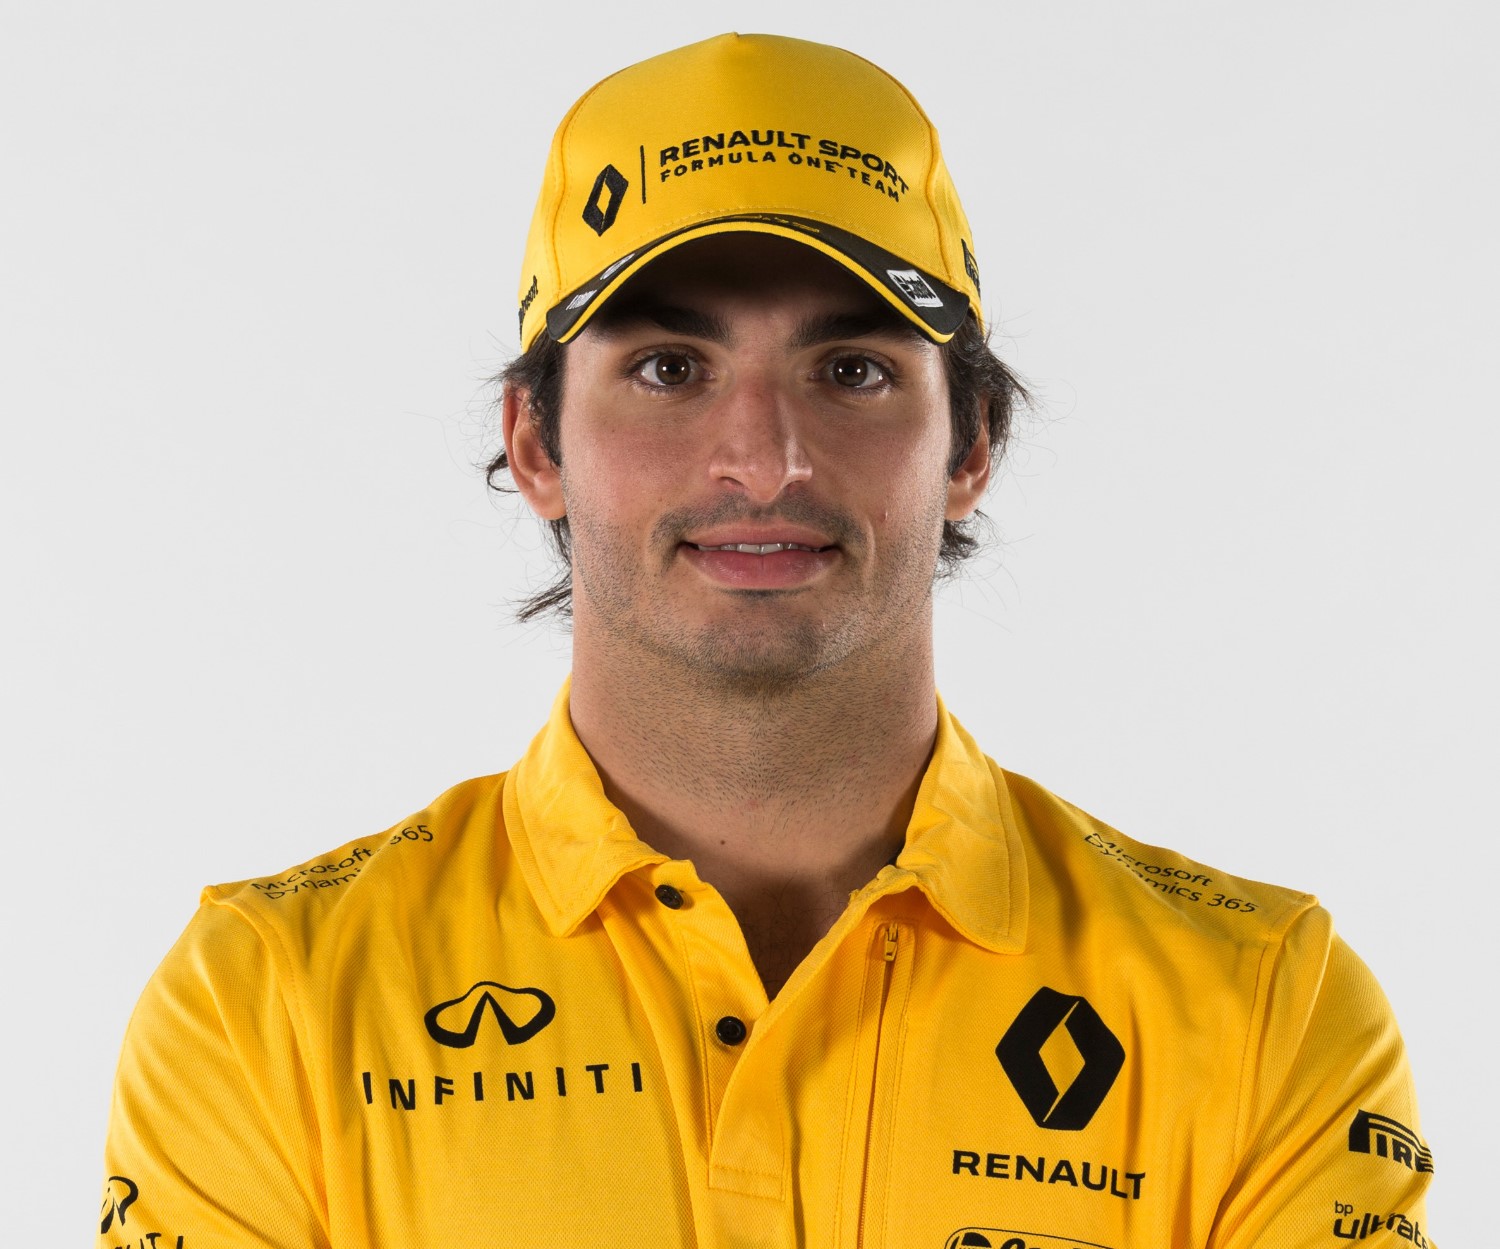 Carlos Sainz Jr. now in Renault colors